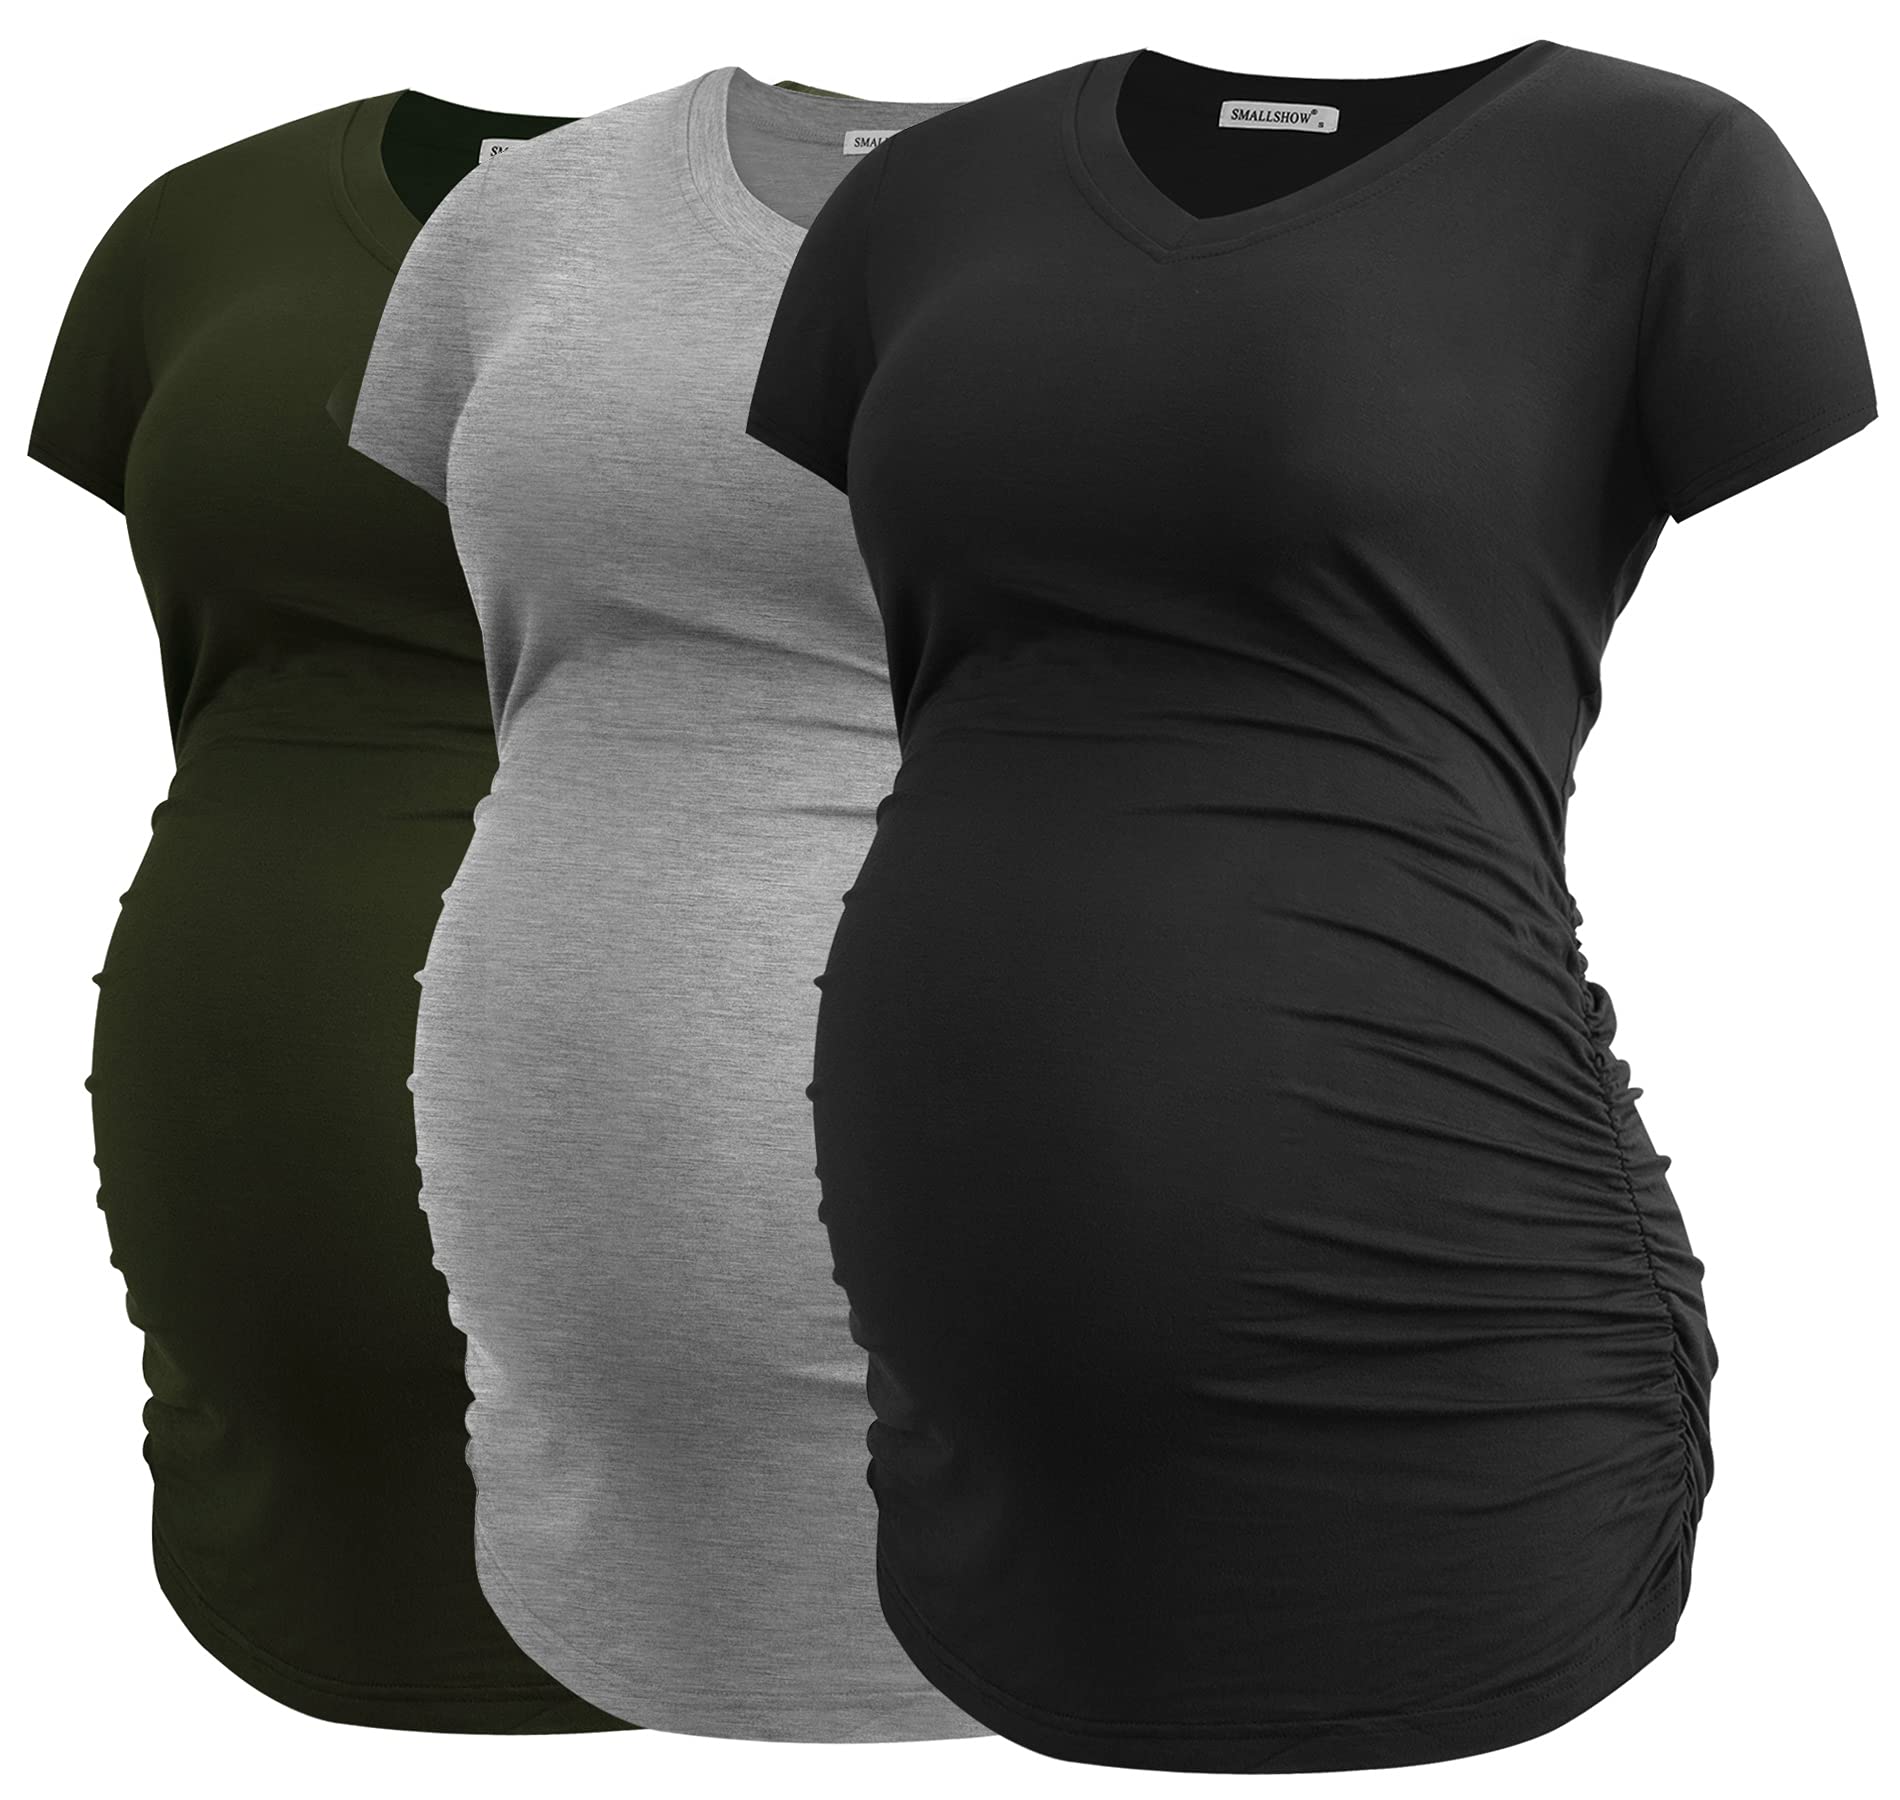 Smallshow Damen Umstandstop V Hals Schwangerschaft Seite Geraffte Umstandskleidung Tops T Shirt 3 Pack,Army Green-Black-Light Grey,S